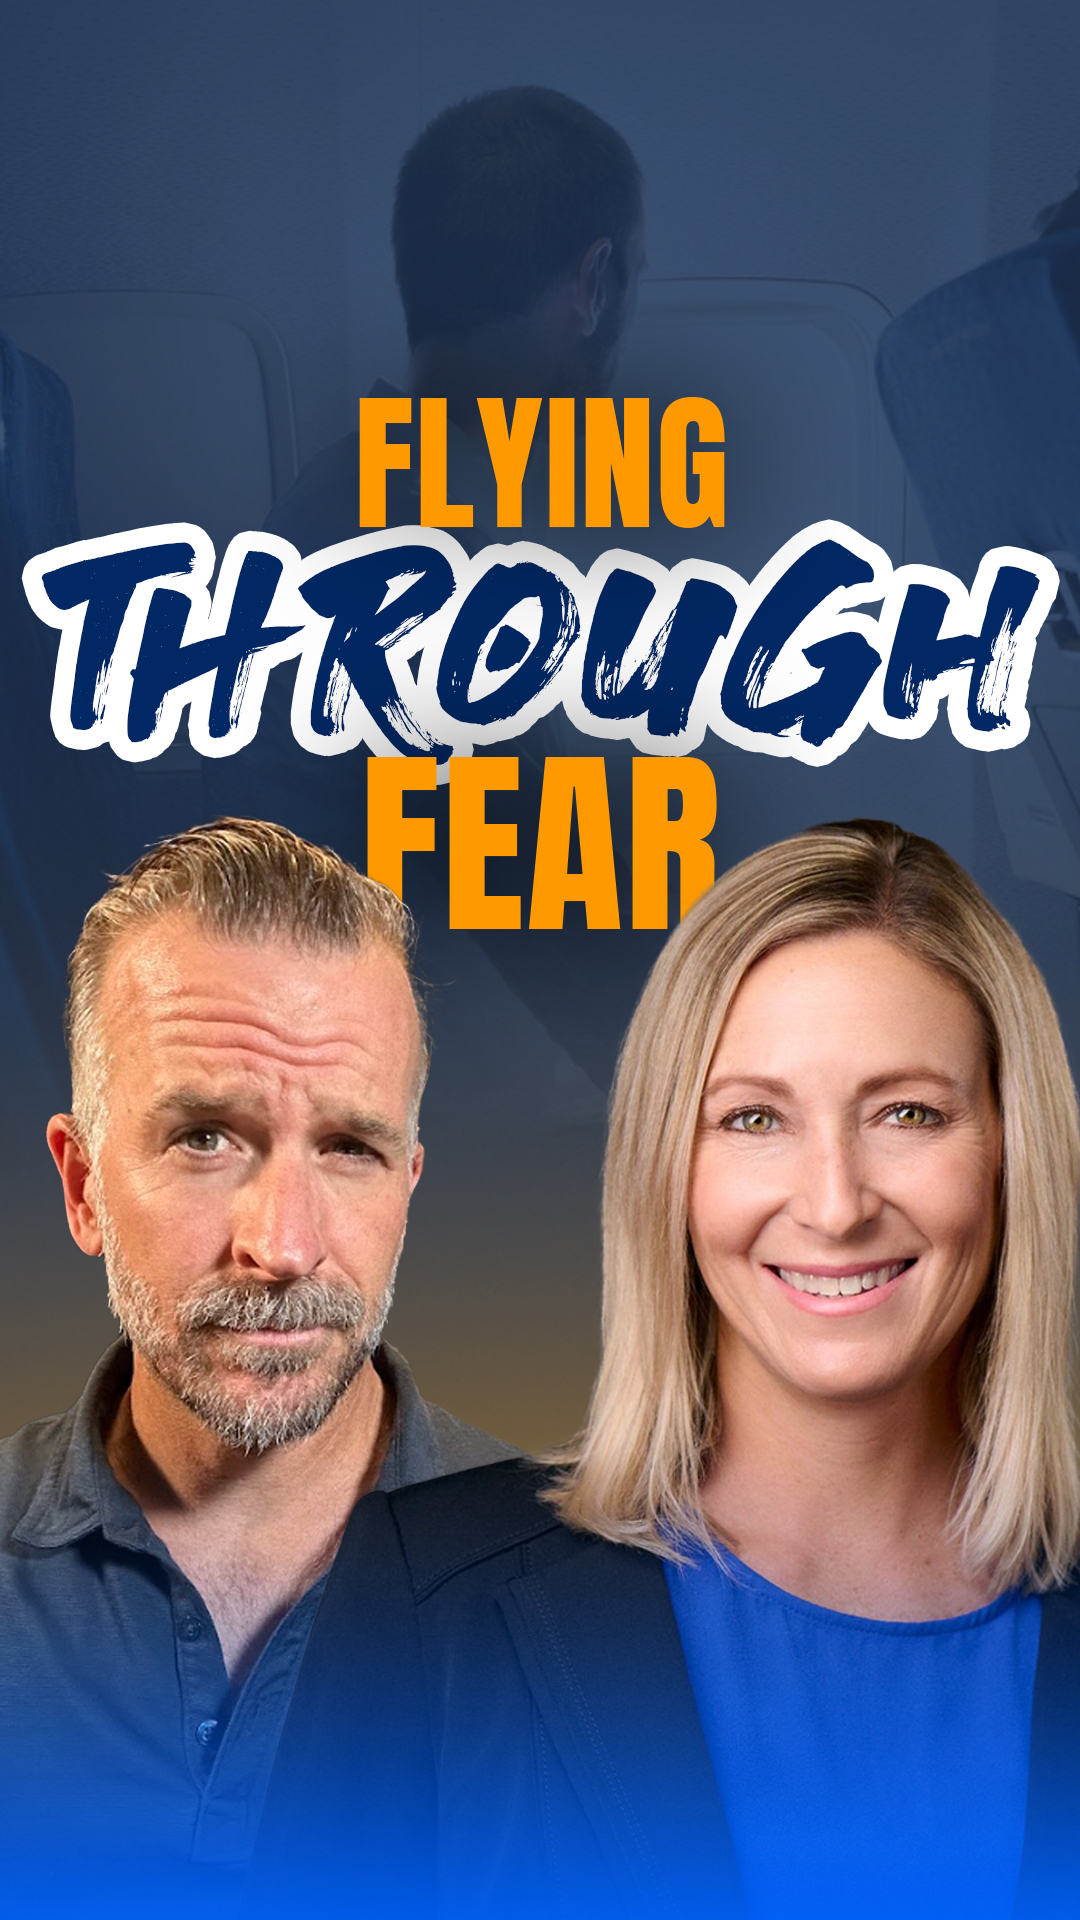 Flow Over Fear: Flying Through Fear